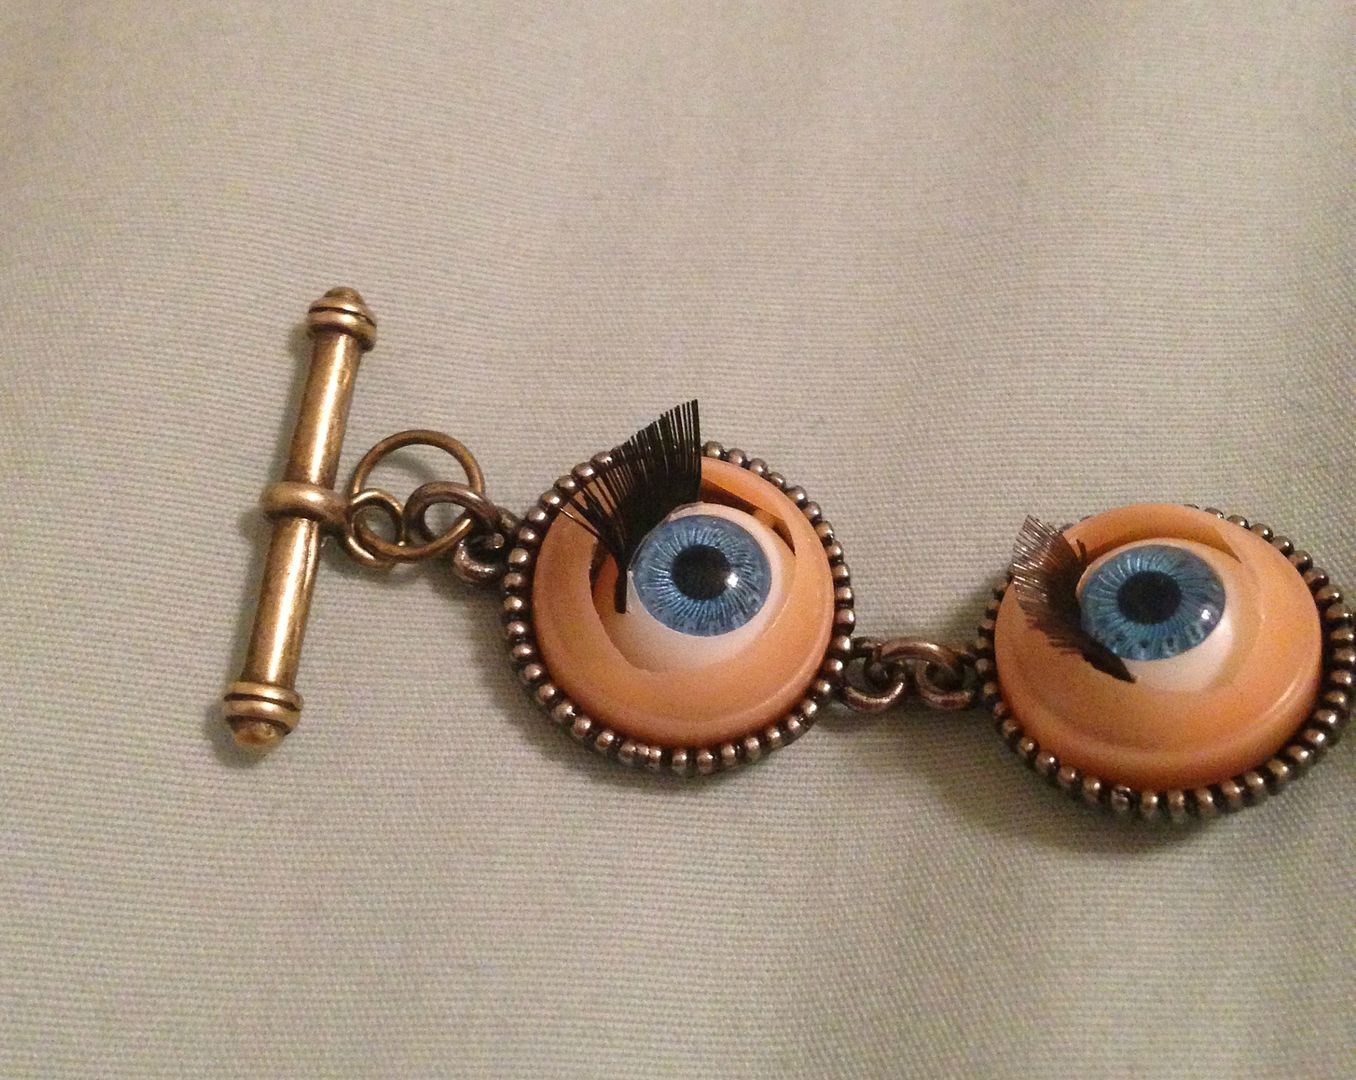 Baby Doll Eyes Bracelet | The TipToe Fairy #tutorial #jewelry #bracelettutorial